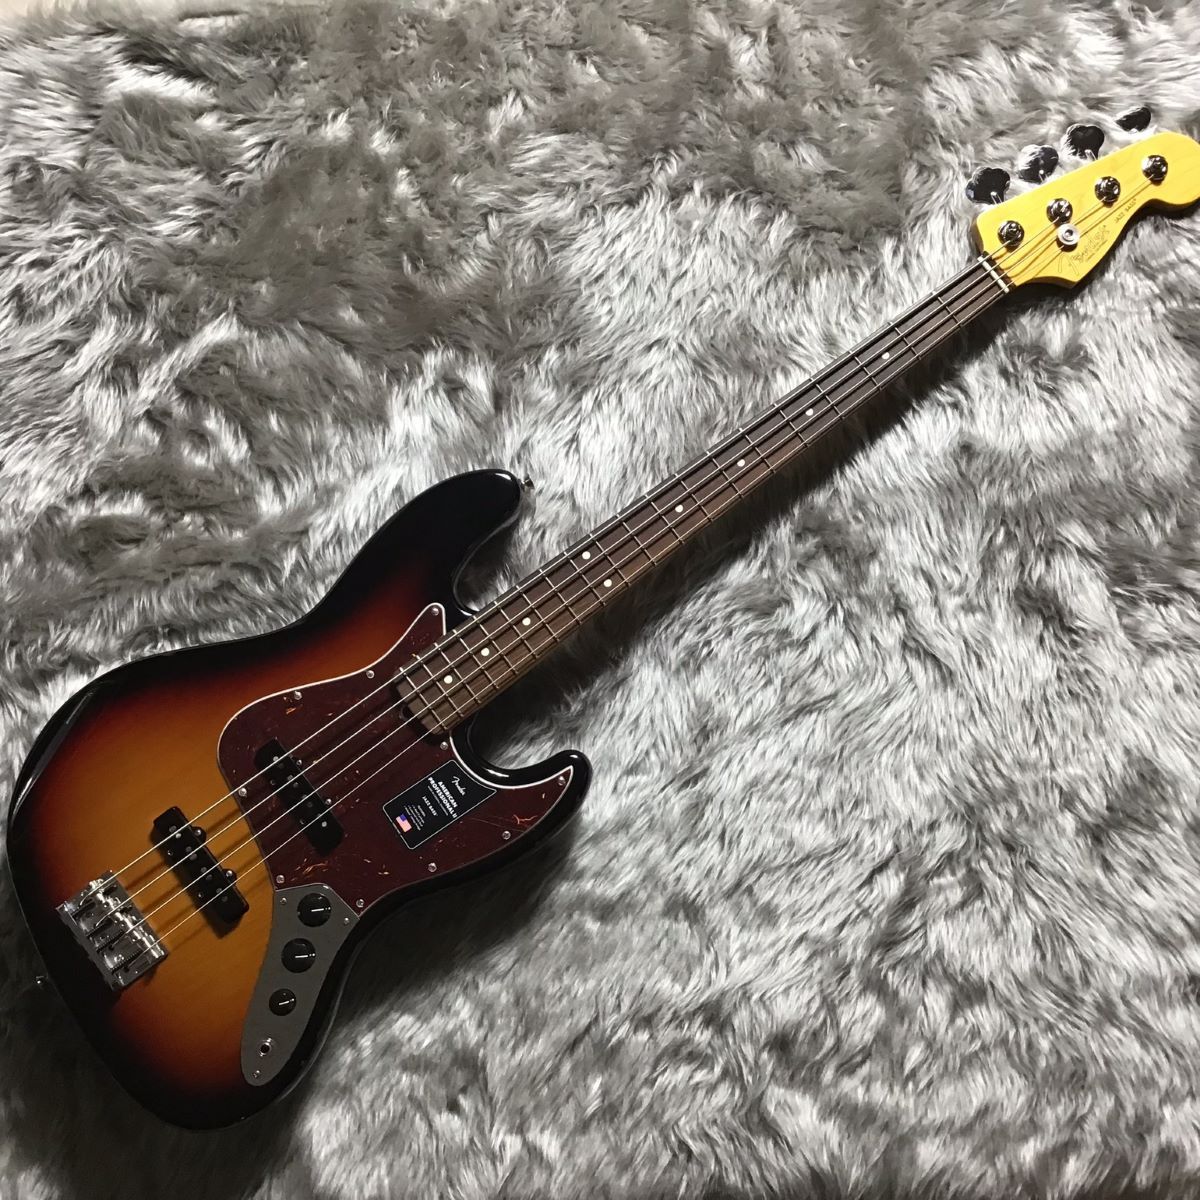 Fender American Pro エレキベース Jazz Bass 黒